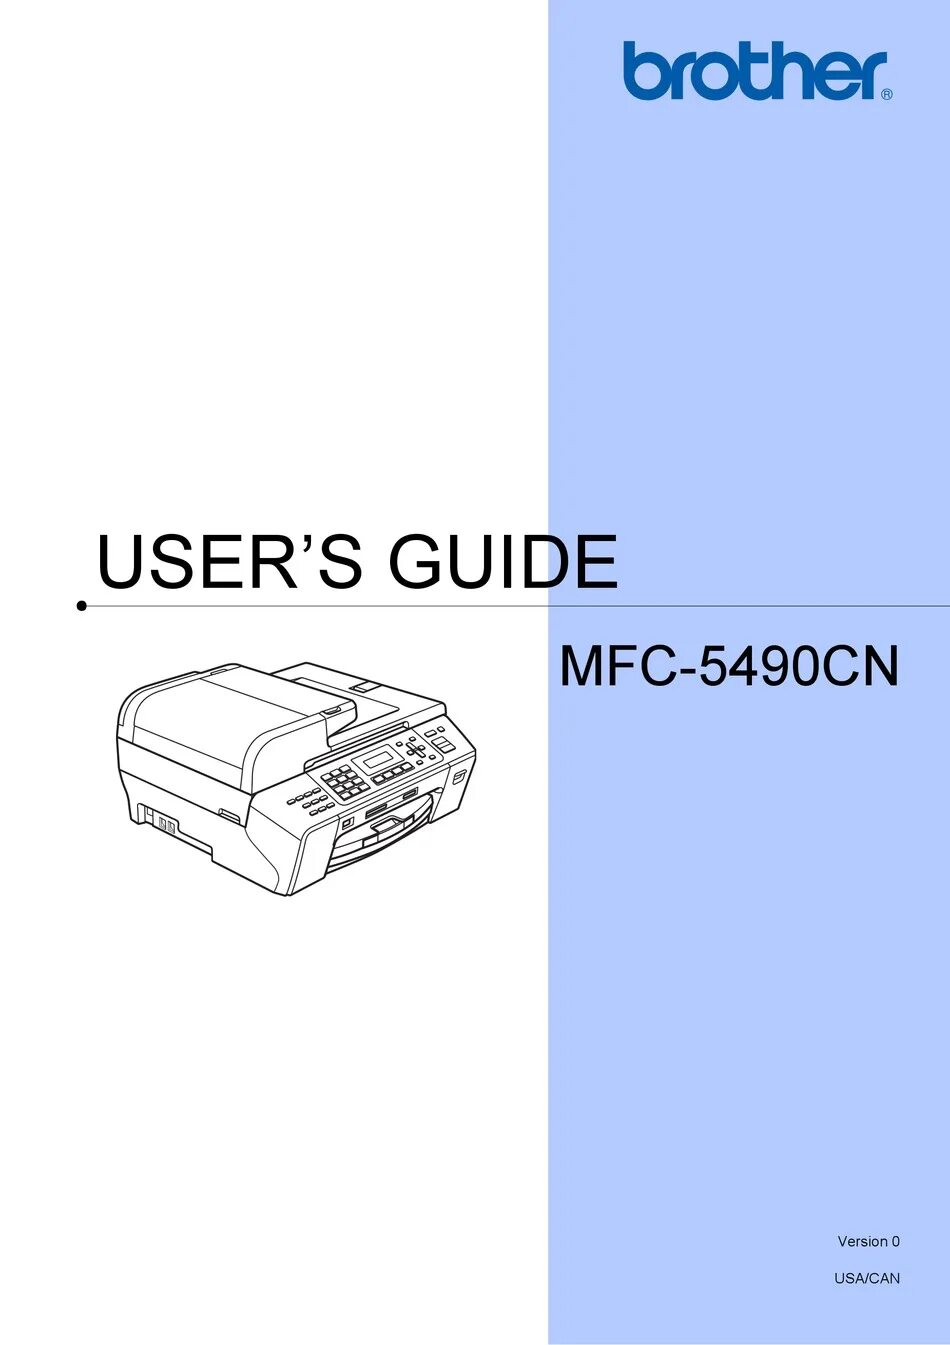 Инструкция бротхер. МФУ DCP-385c. DCP 6690. Принтер brother DCP 6690. Принтер brother DCP 350c.